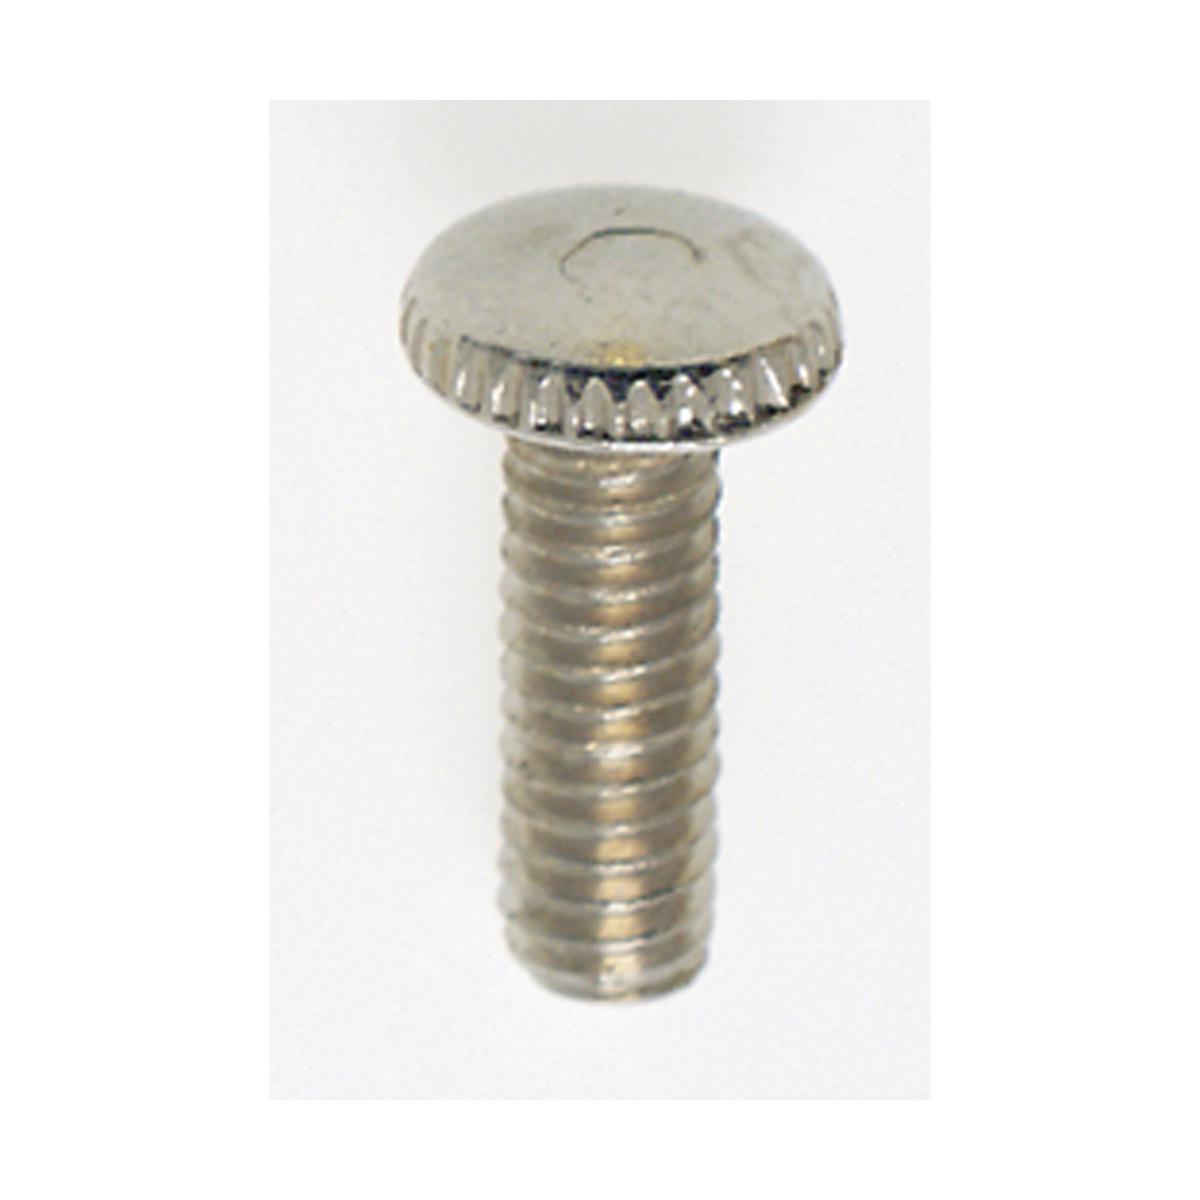 Satco 90-023 Steel Knurled Head Thumb Screw 8/32 1/2" Length Nickel Plated Finish